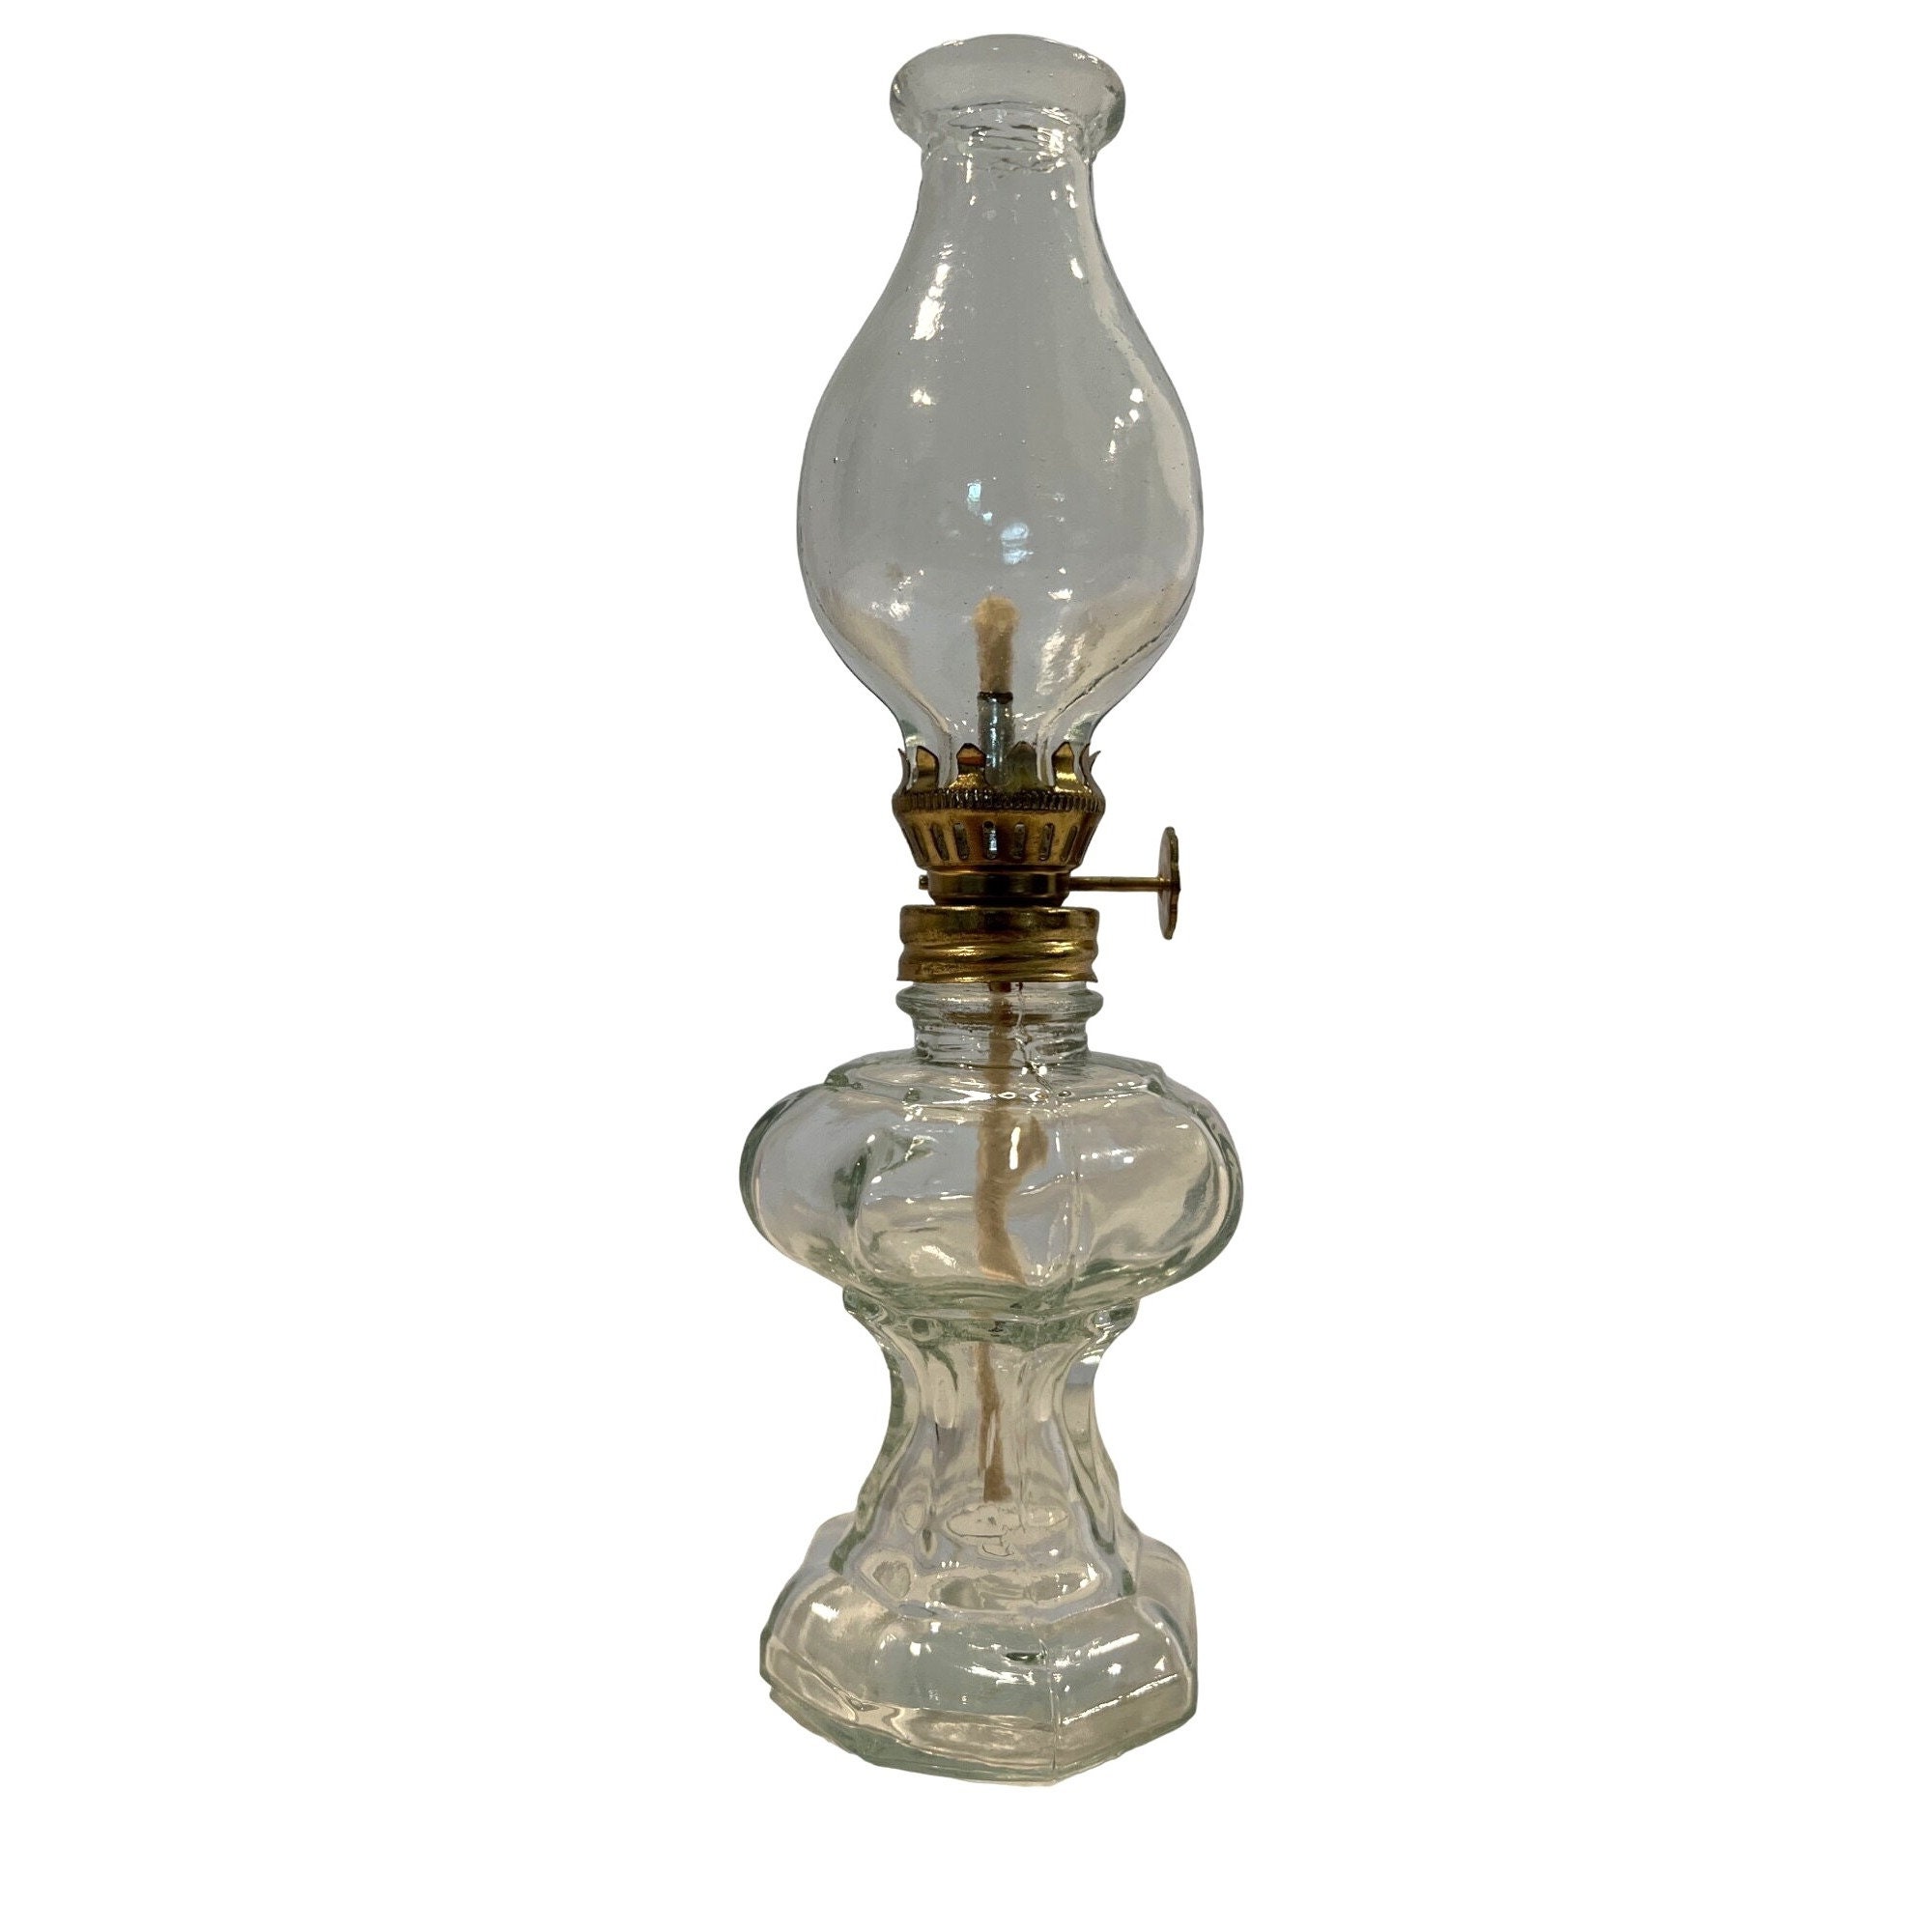 5pcs Glass Wick Holder Cotton Core for Kerosene Oil Lamp Alcohol